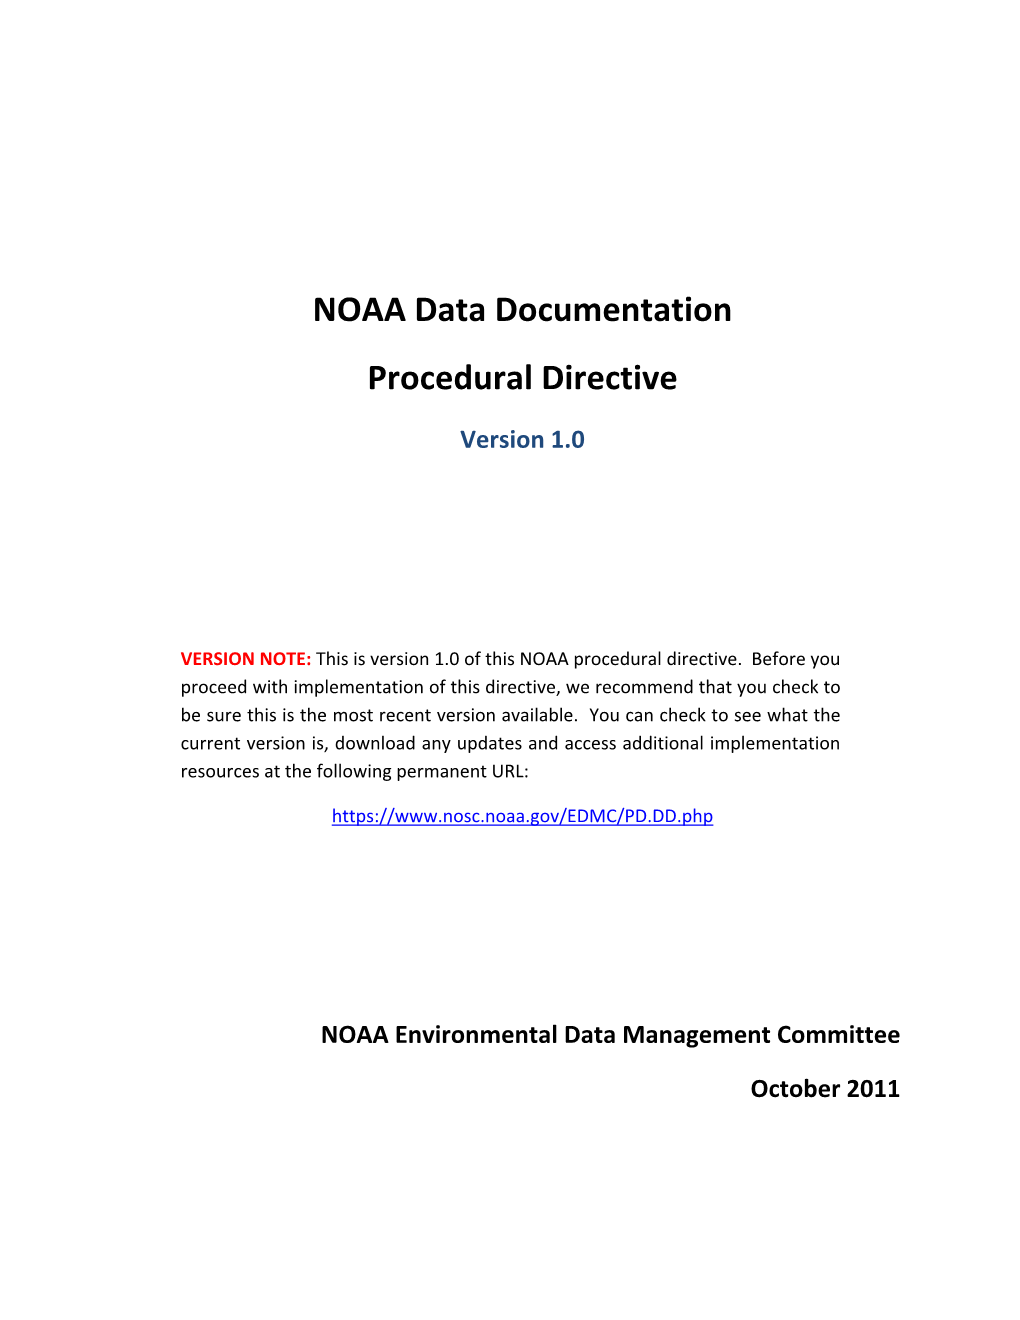 NOAA Data Documentation Procedural Directive